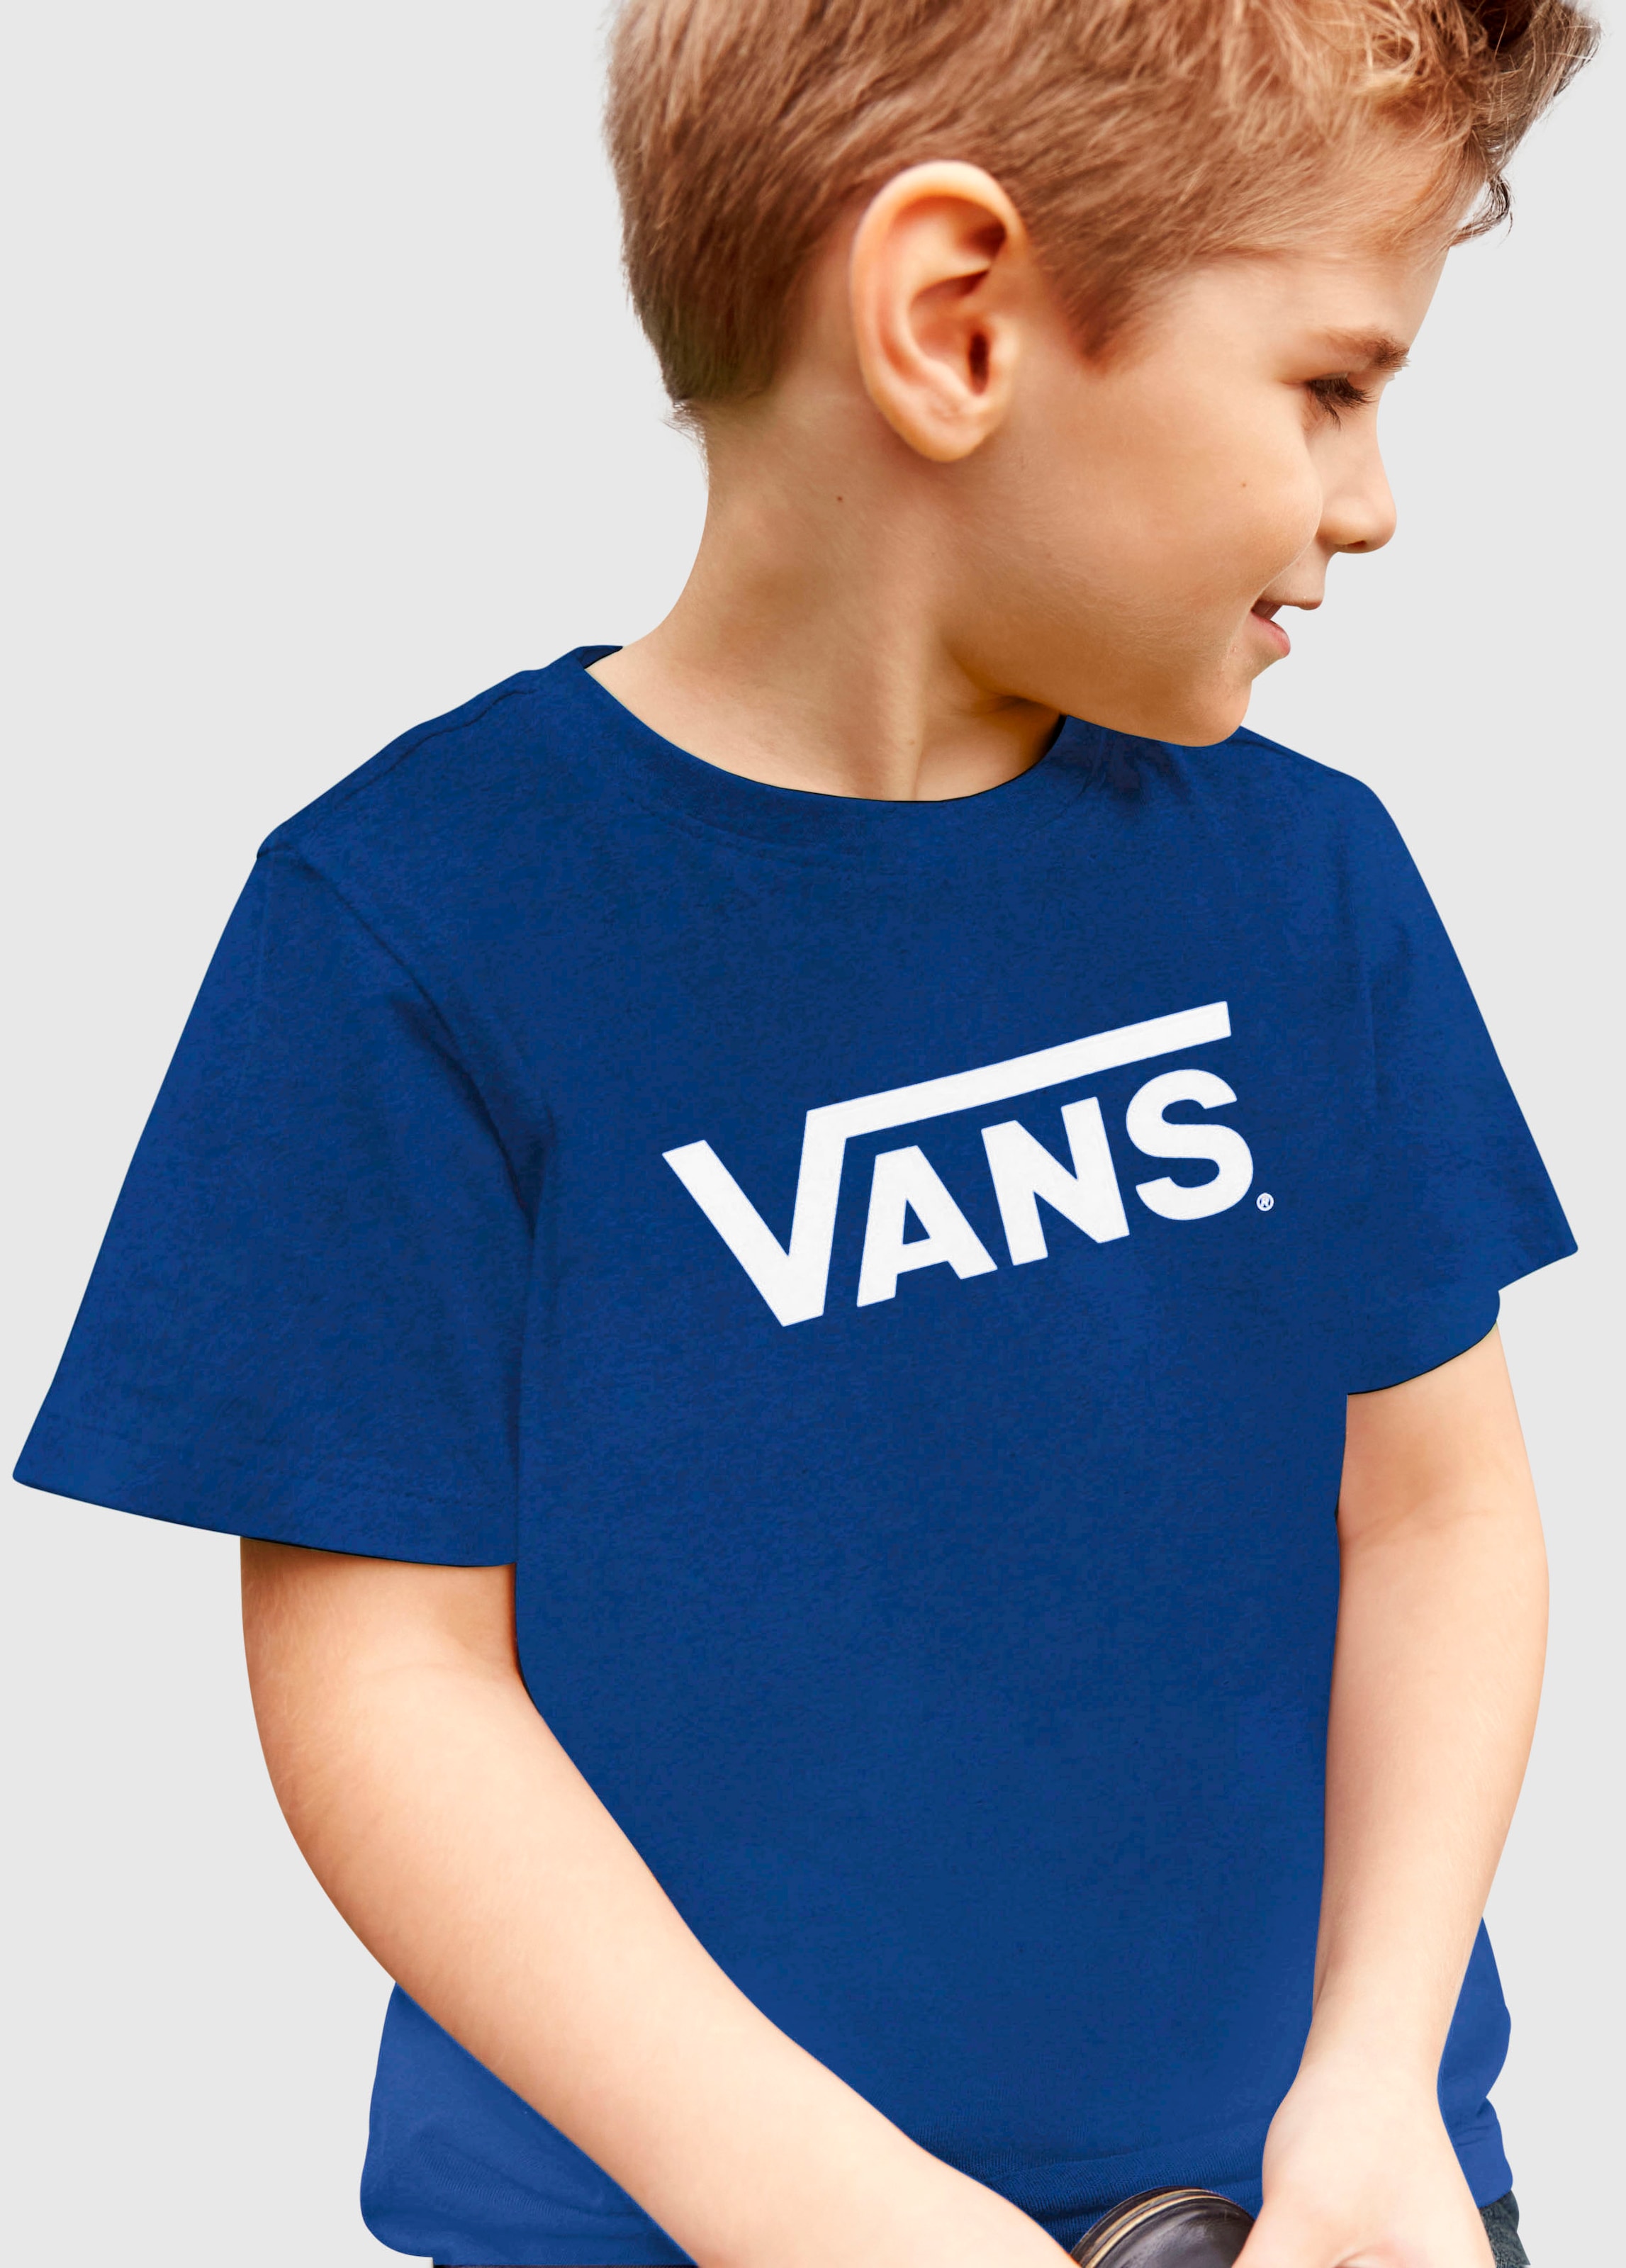 Vans T-Shirt BAUR »BY VANS CLASSIC KIDS« kaufen 